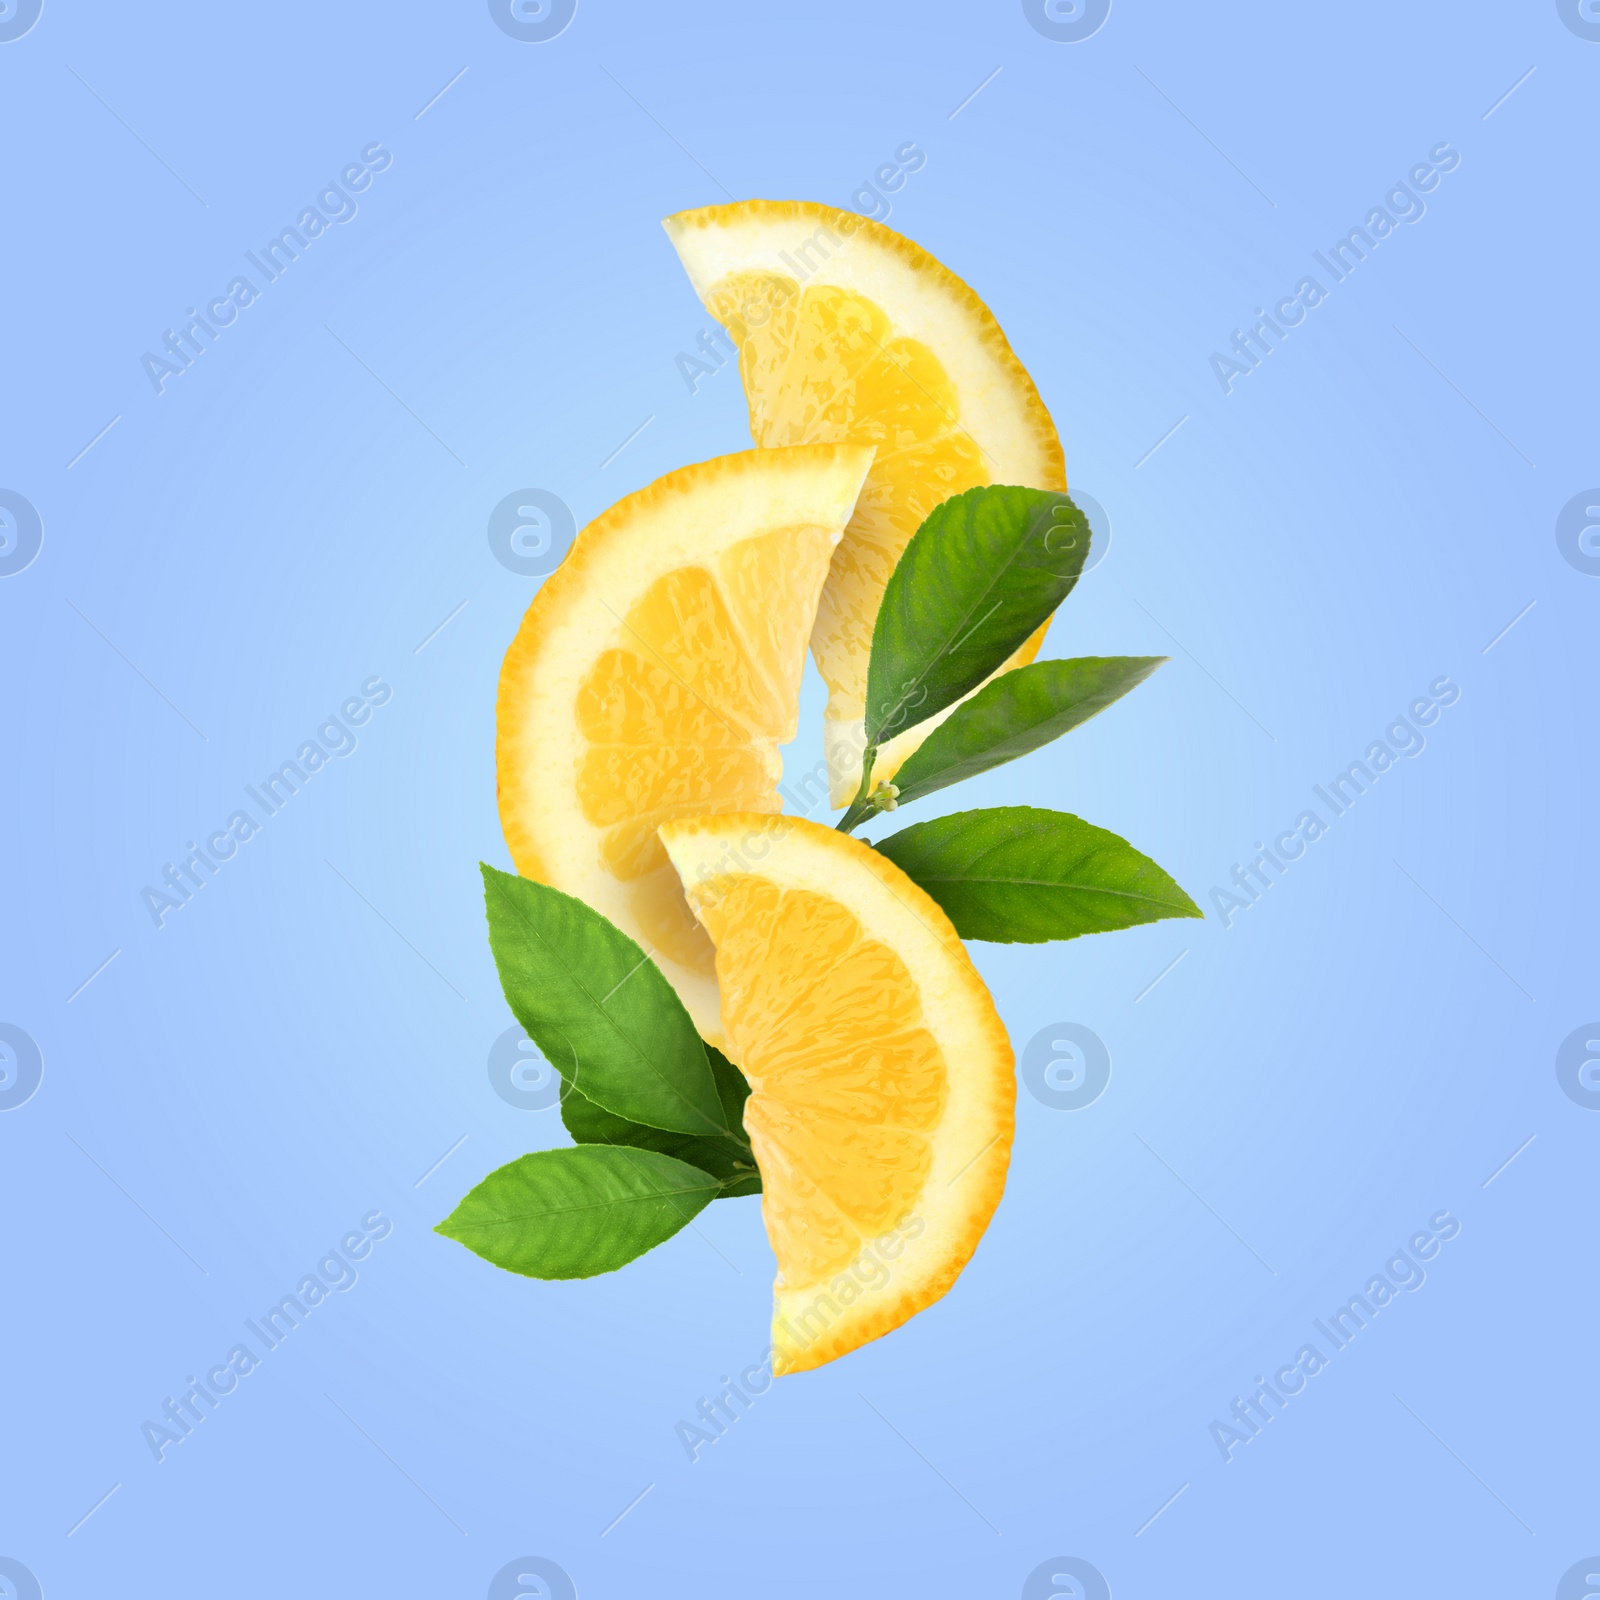 Image of Cut fresh lemon with green leaves falling on pastel light blue background